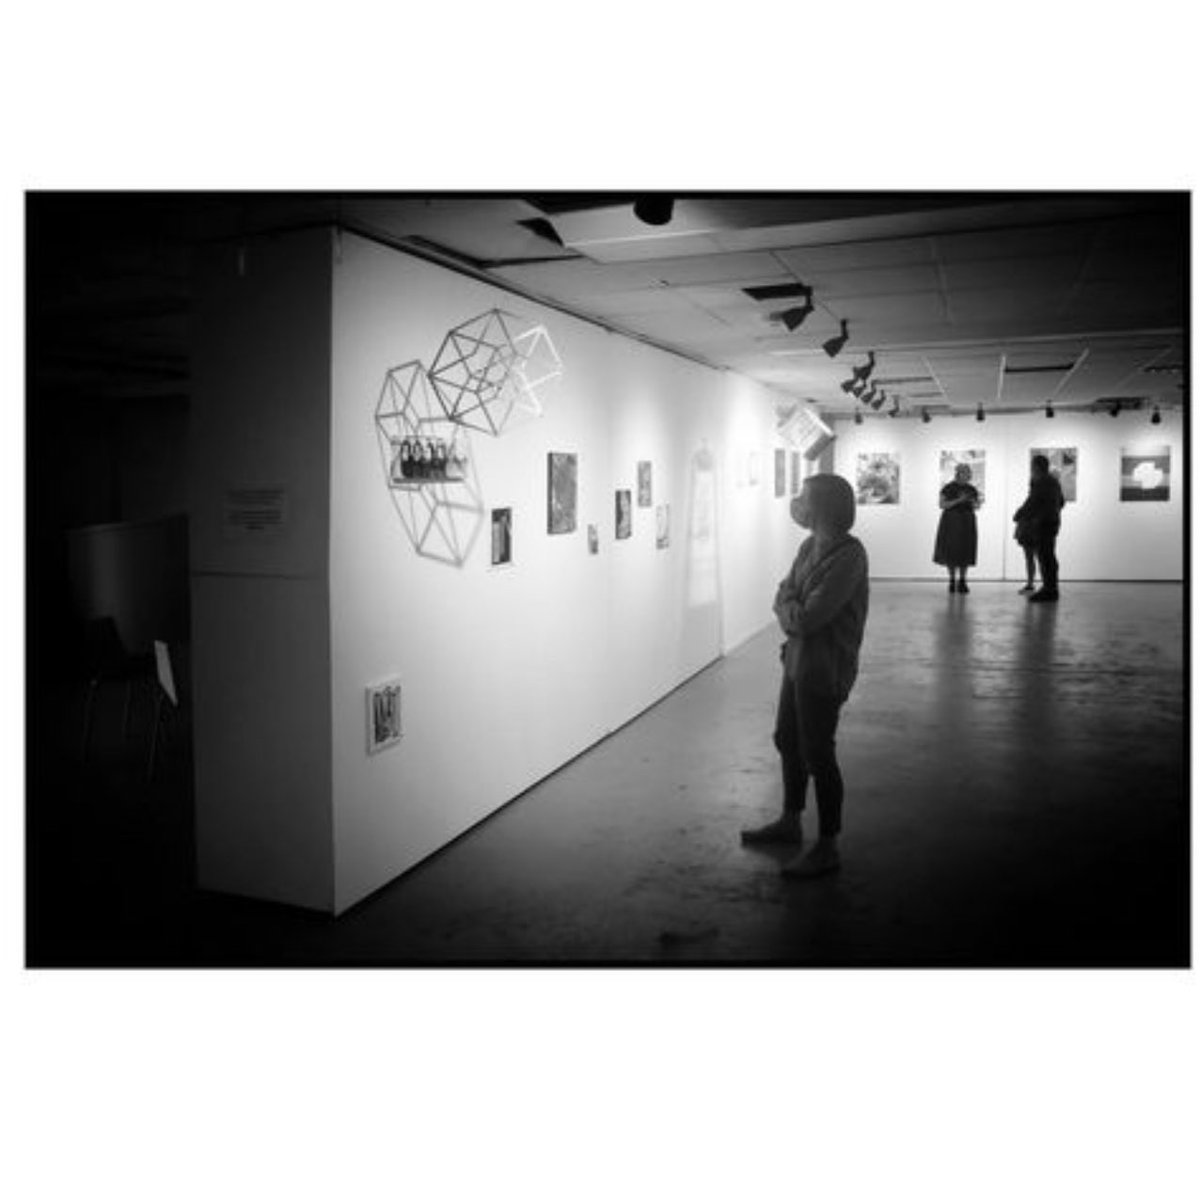 Exhibition photos by @davidhall1964
At @BnDstudios @orbiscommunity 
#ArtExhibition #abstractartist #visualart #visualartist